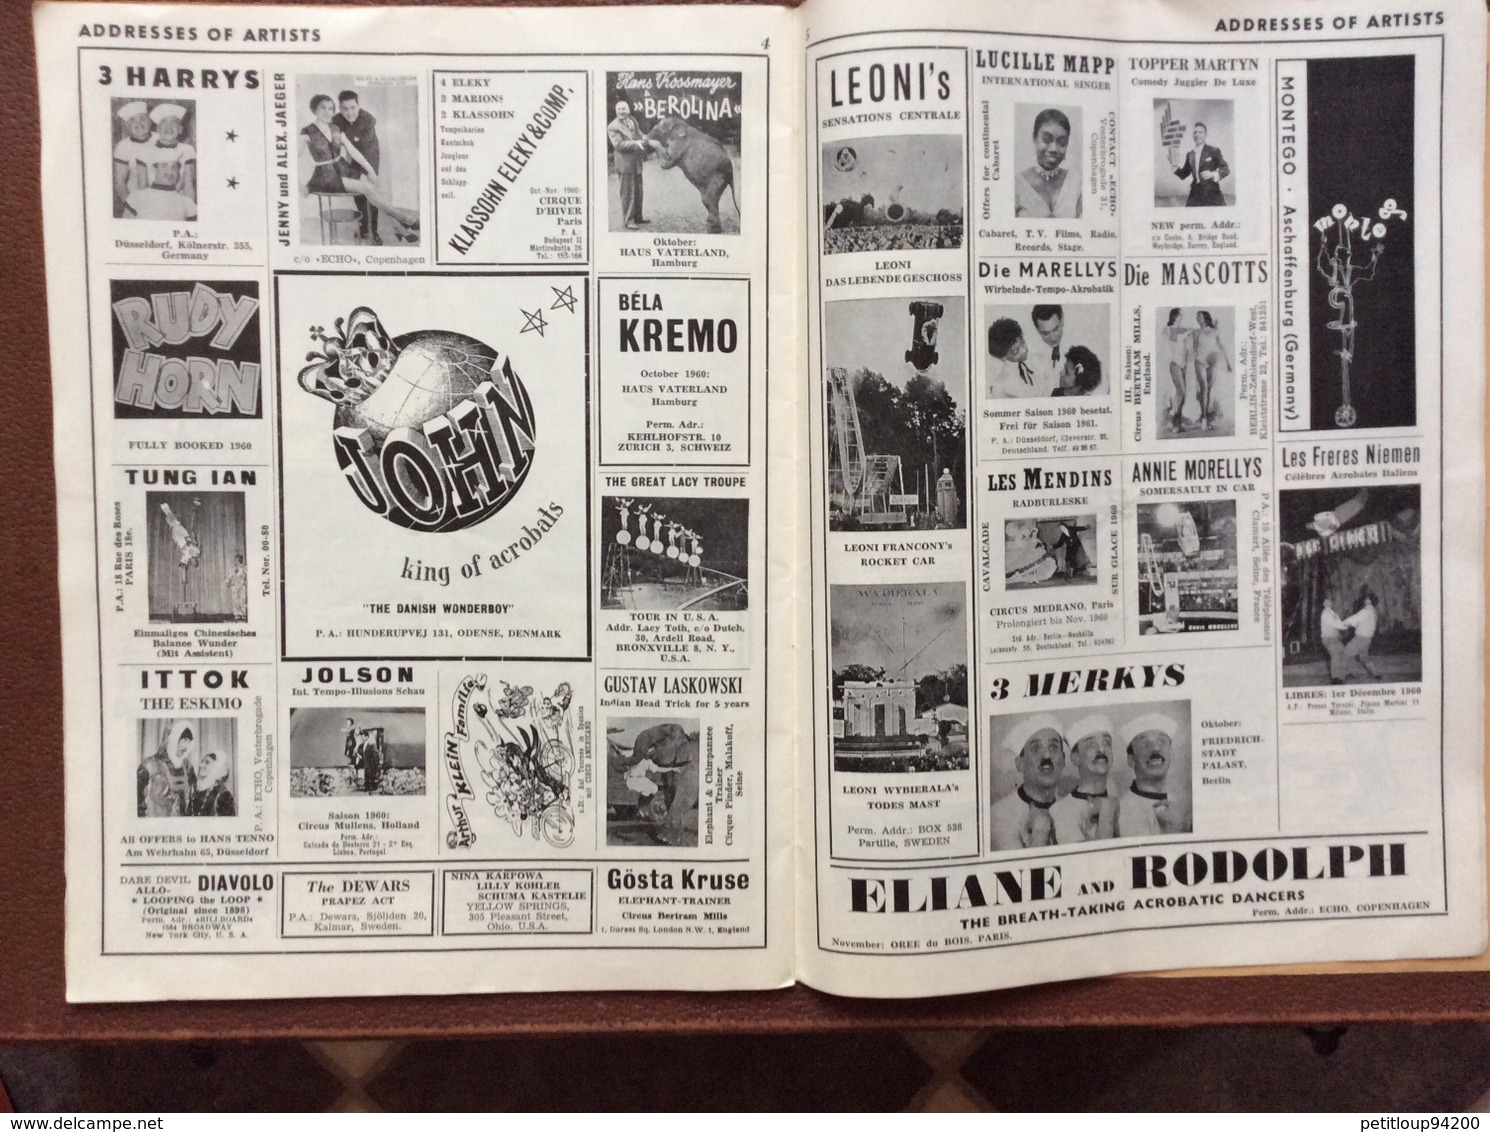 CIRQUE  ÉCHO LTD.  Professional Circus And Variety Journal  No 224  OCTOBER 1960  Les Tonelys  COPENHAGEN  Danmark